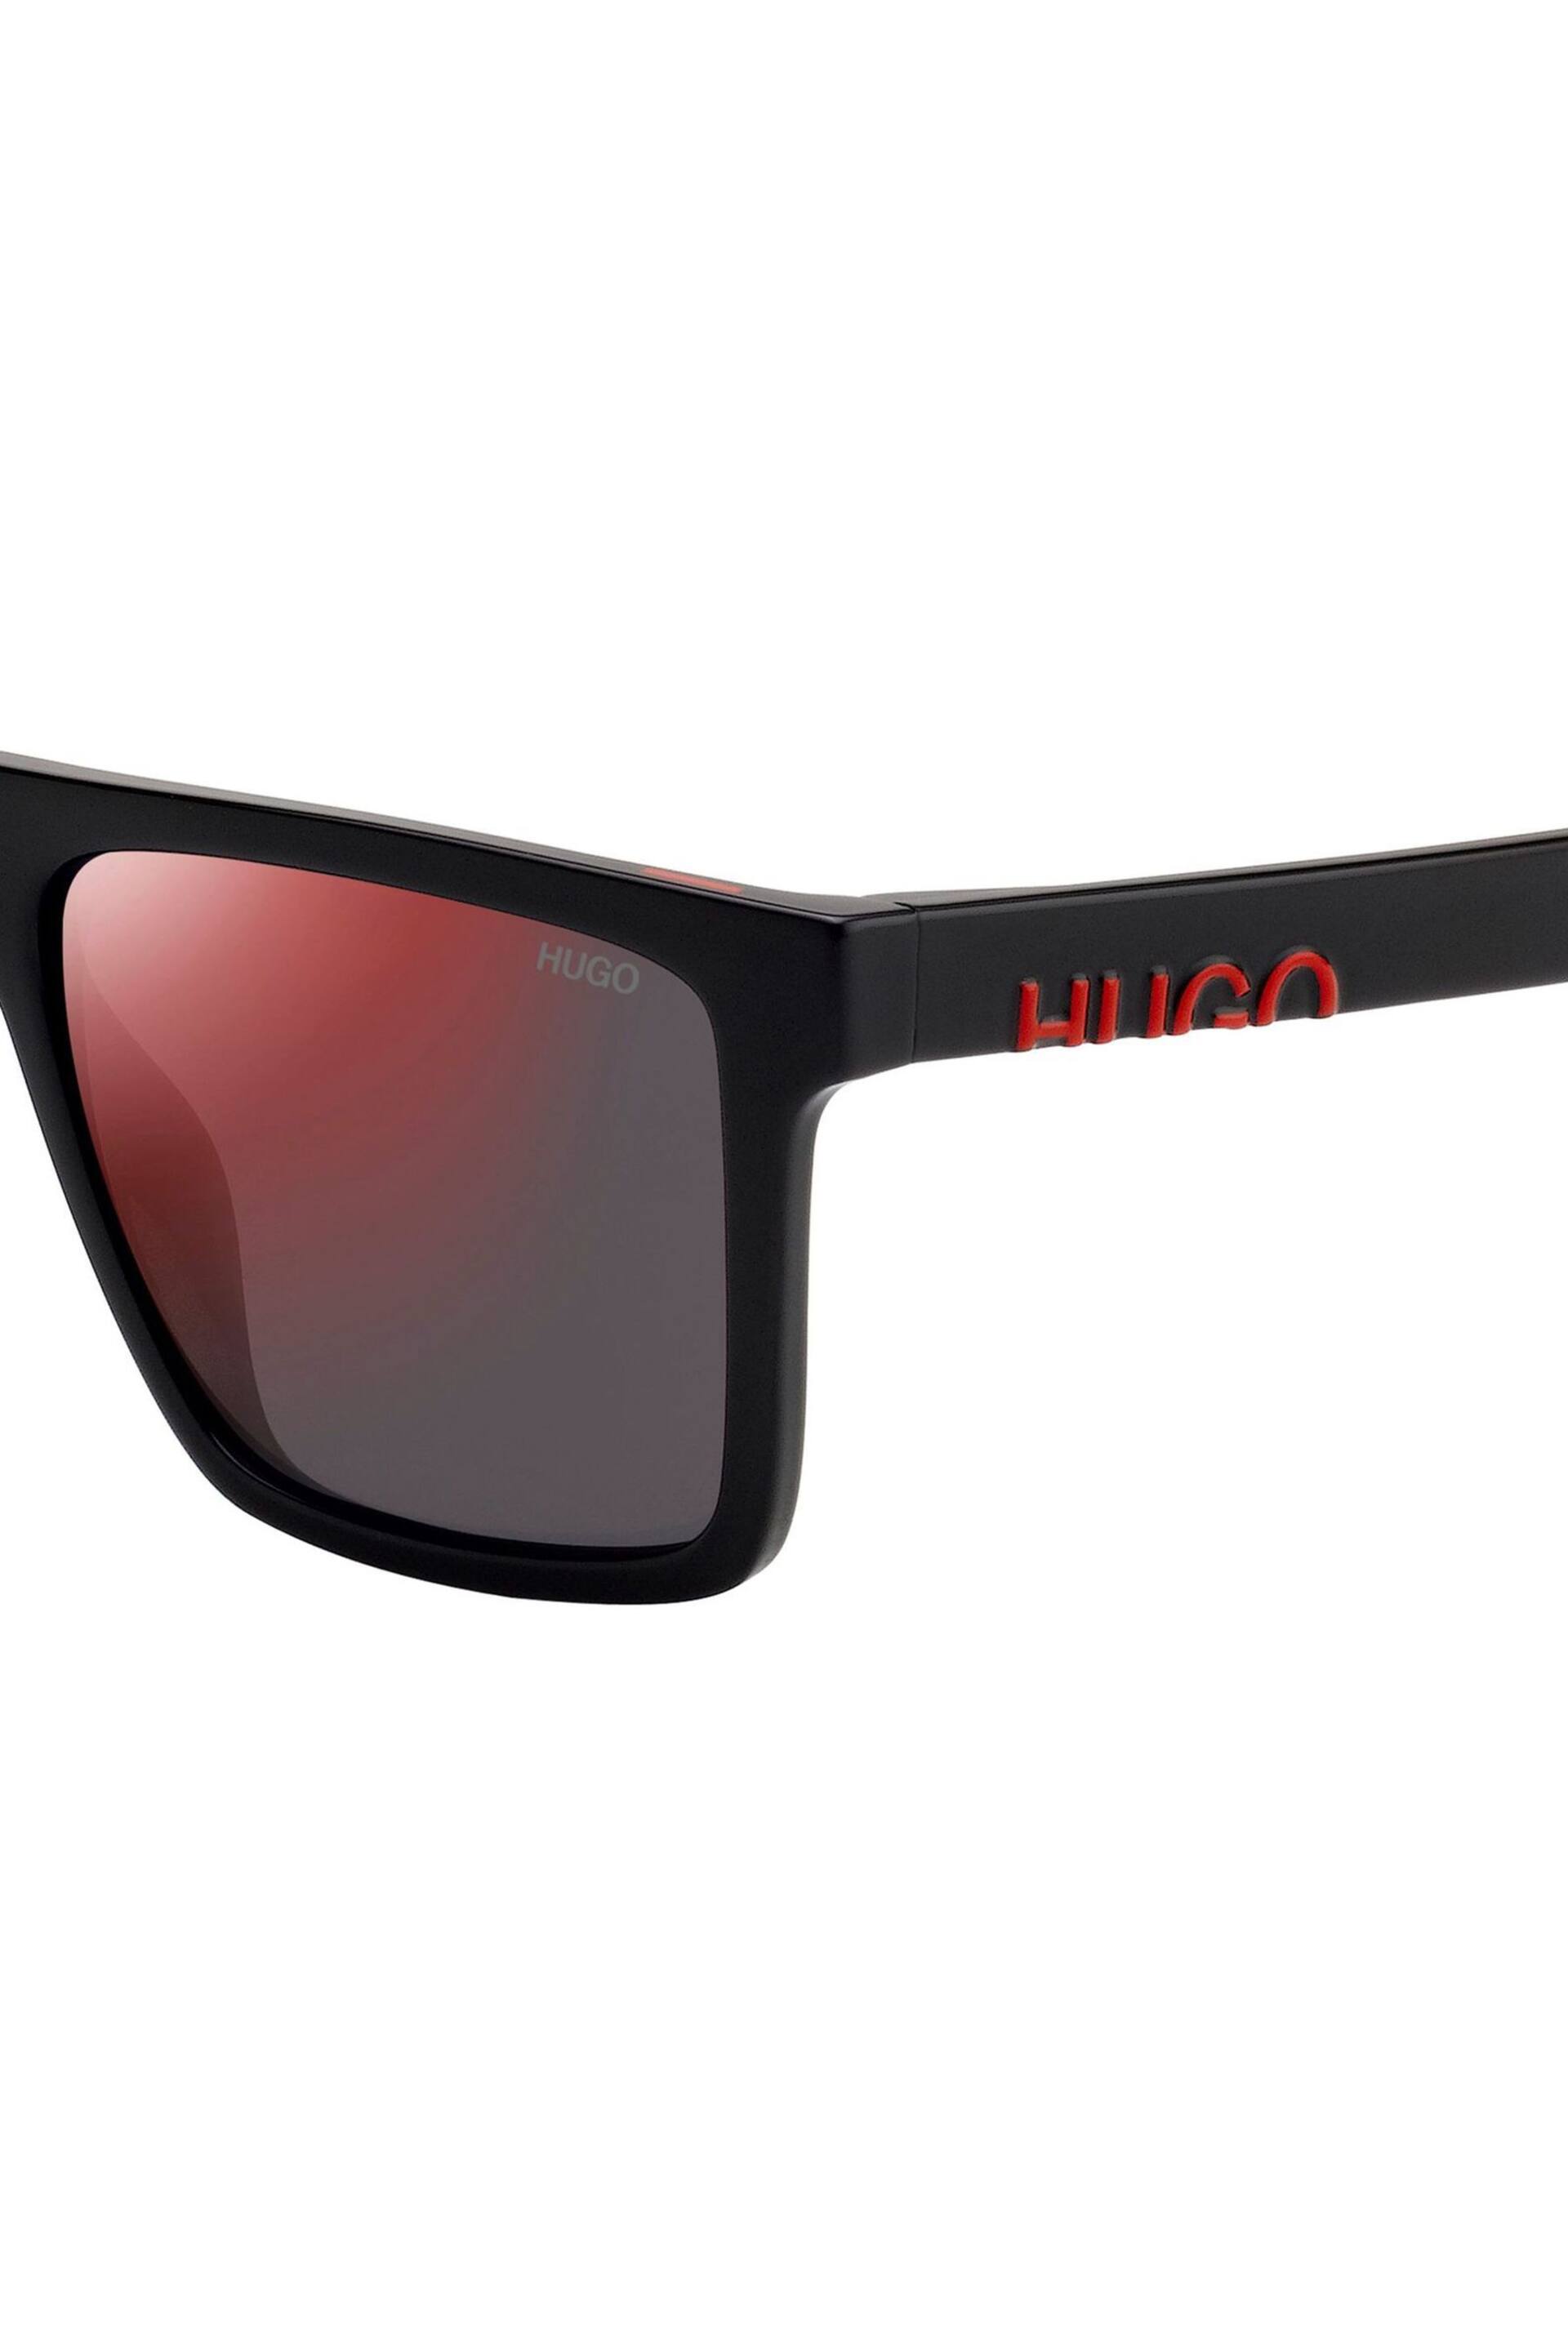 HUGO Rectangular Sunglasses - Image 3 of 3